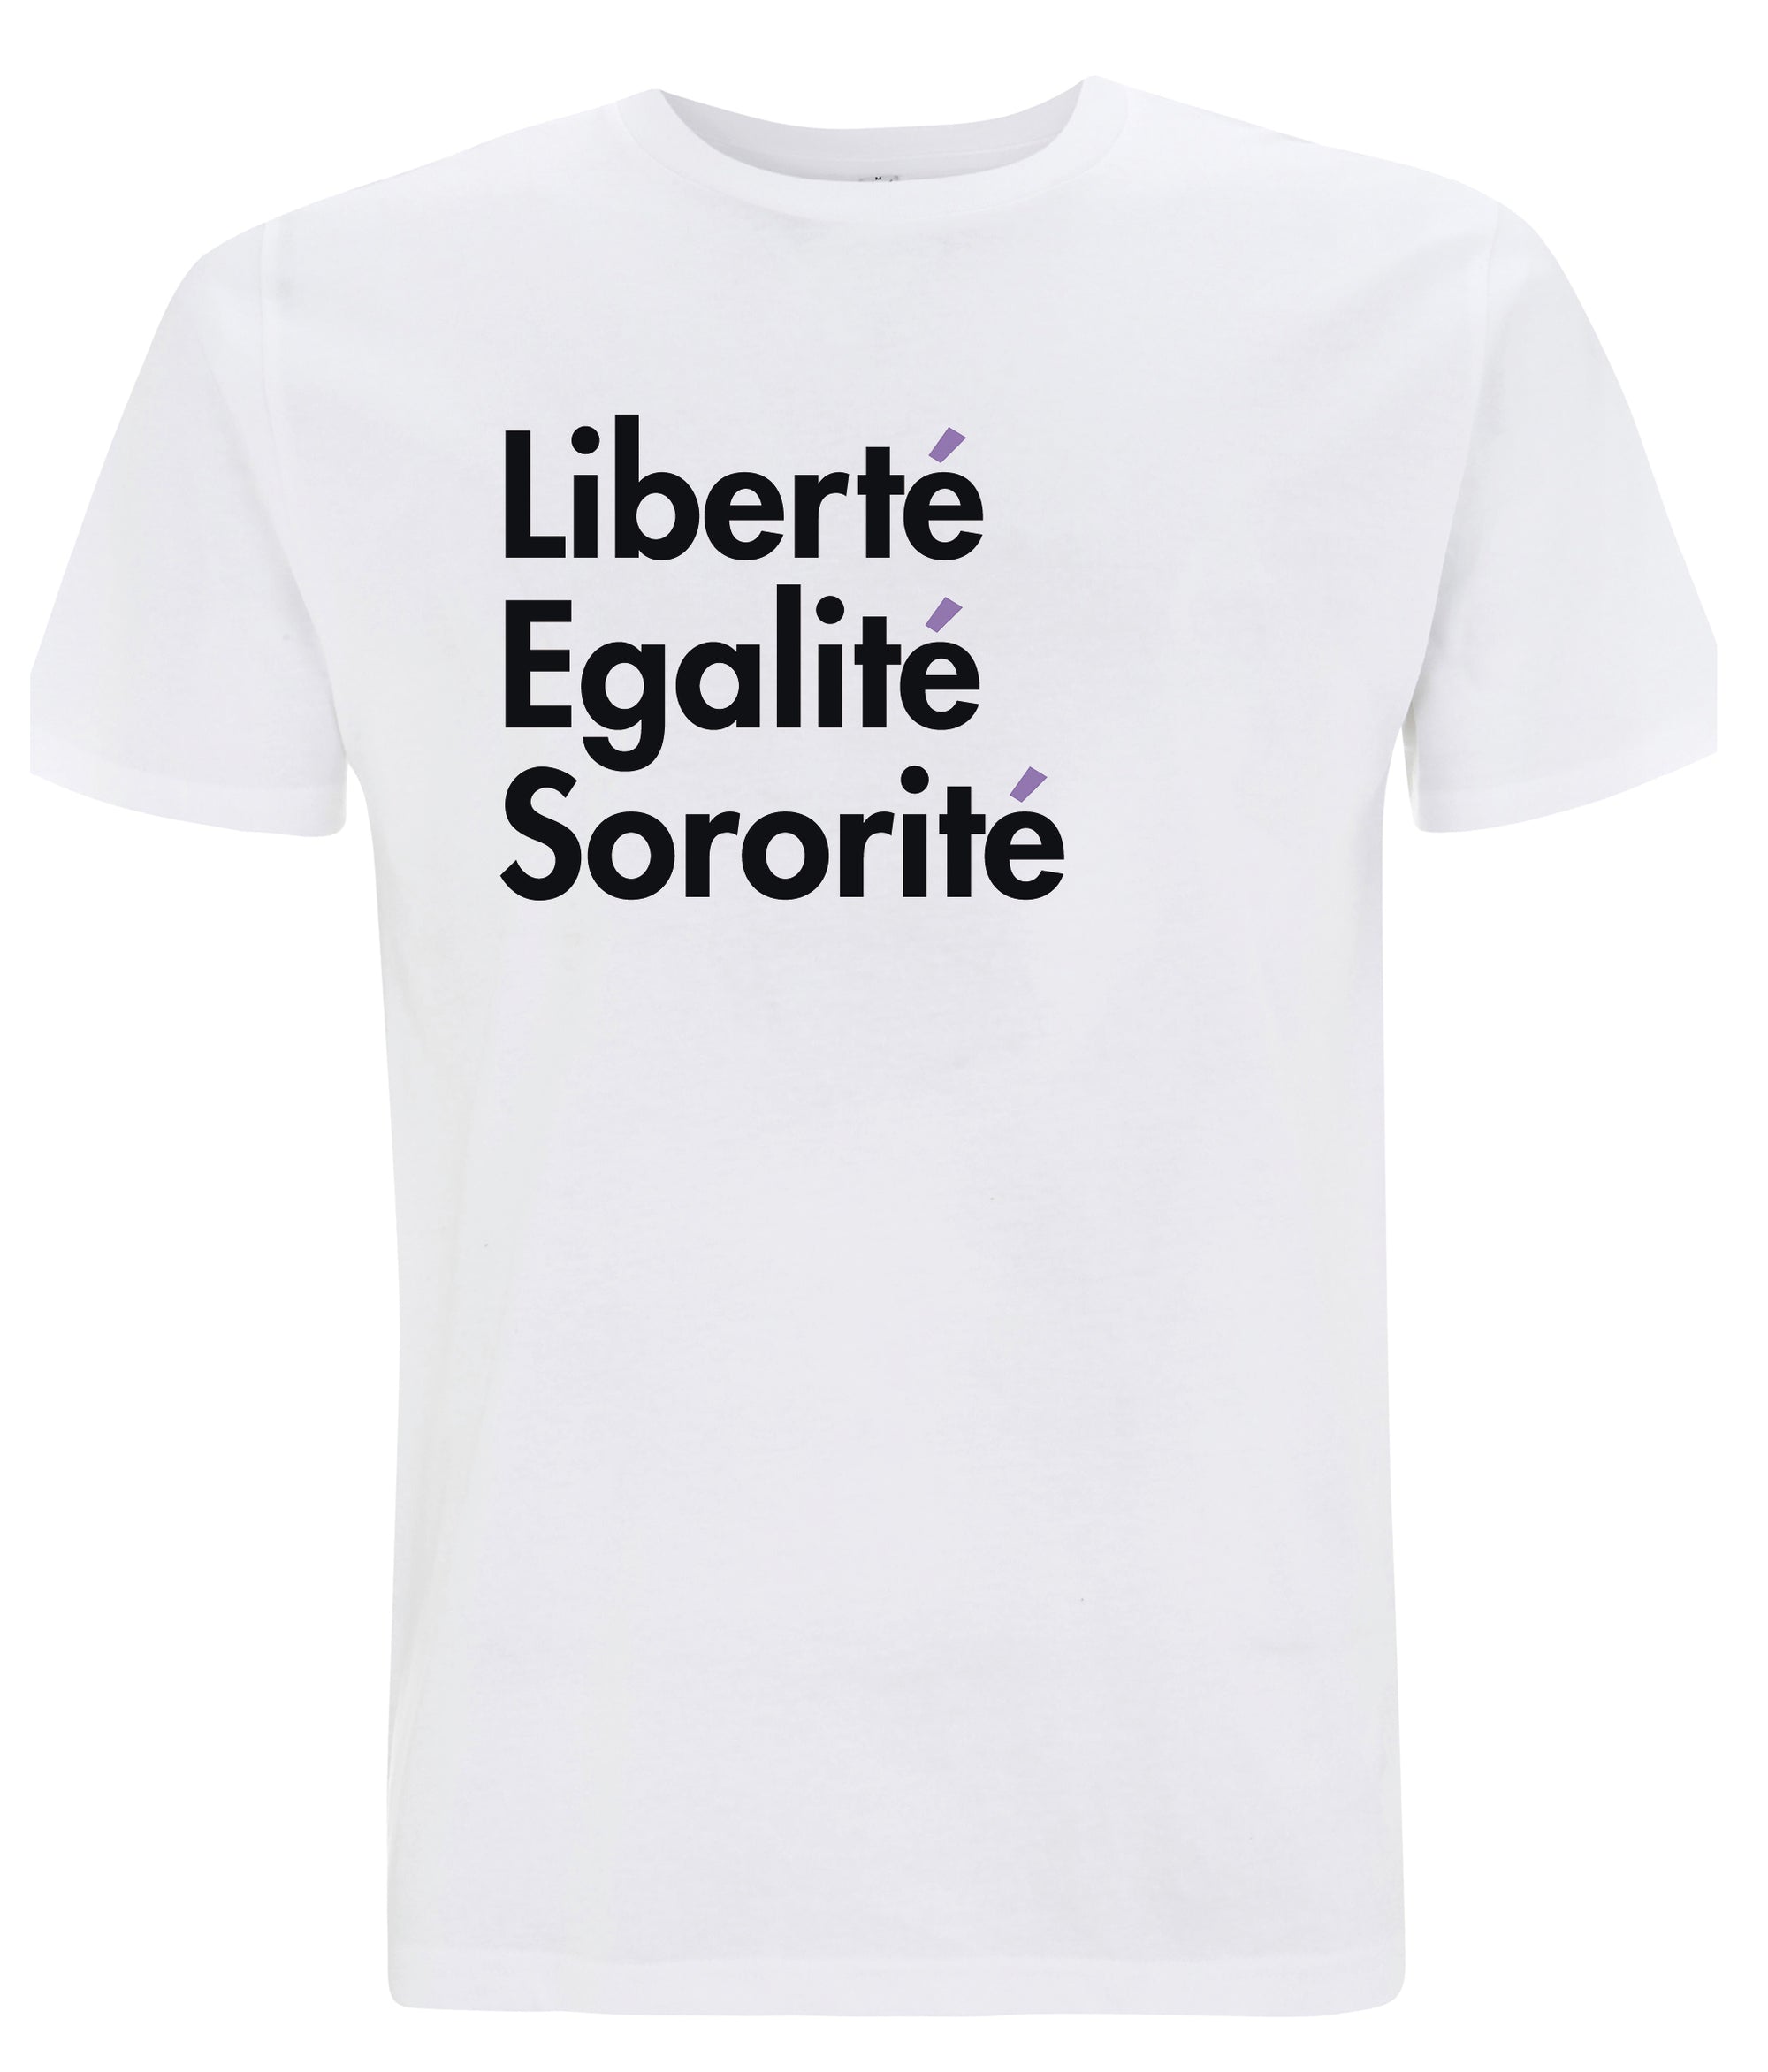 Liberté Egalité Sororité Organic Feminist T Shirt Black